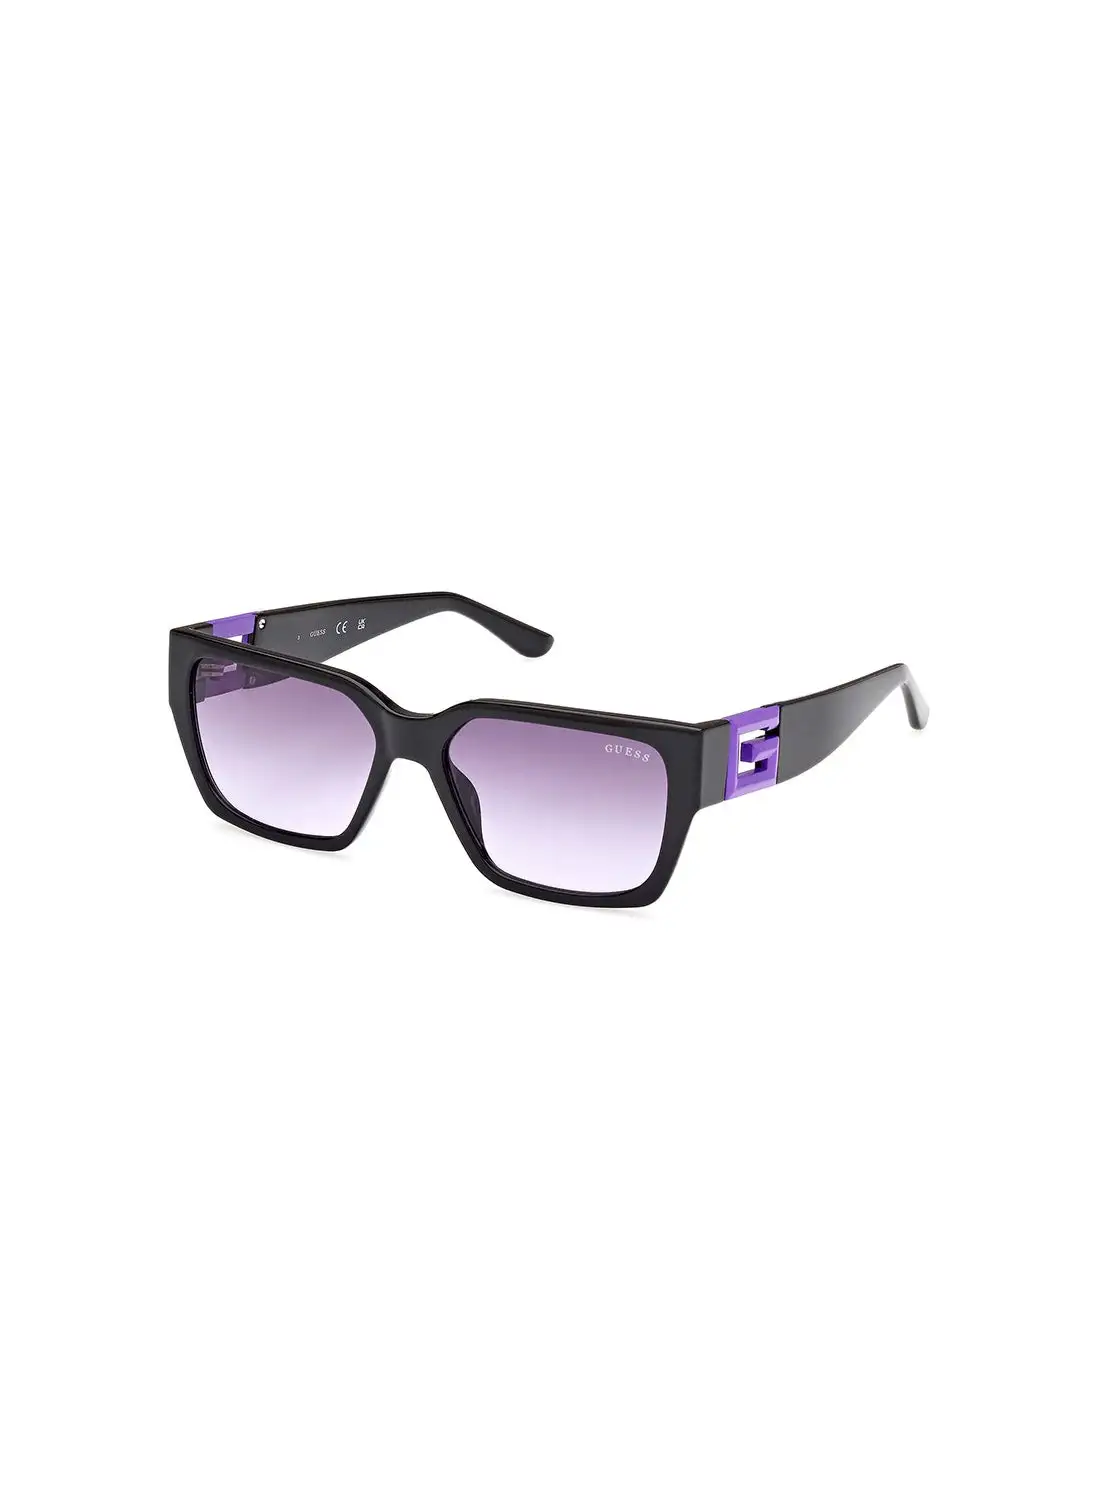 GUESS Unisex UV Protection Square Sunglasses - GU791683Z55 - Lens Size: 55 Mm